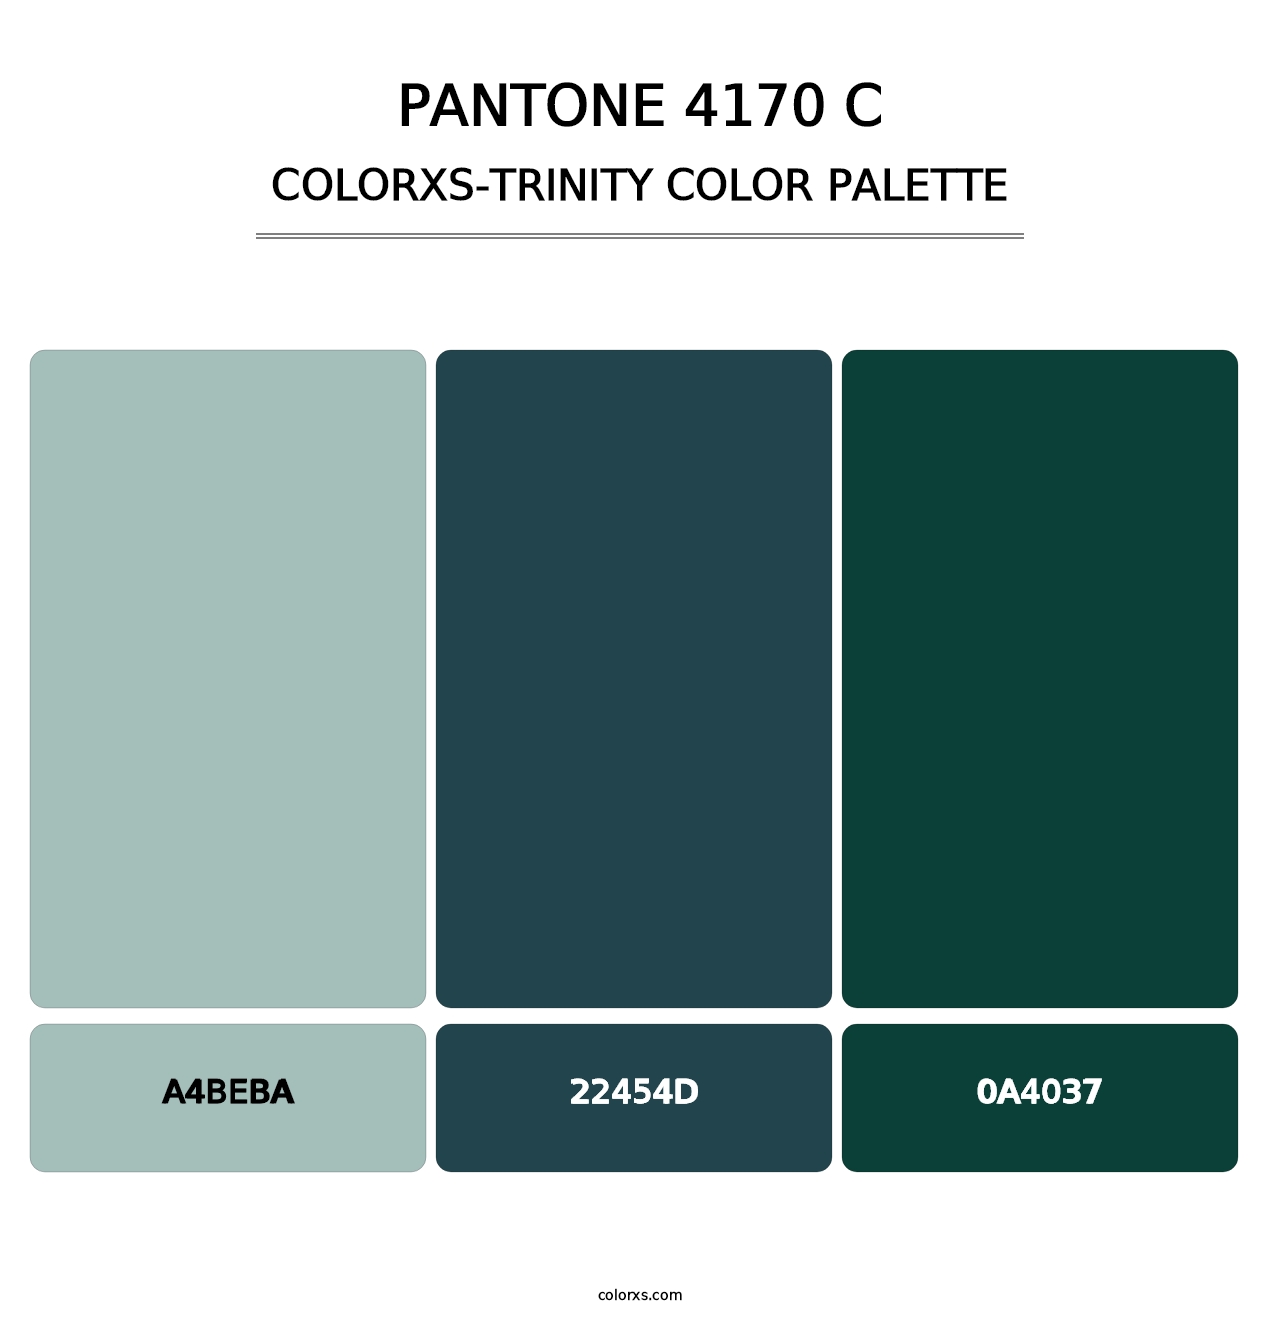 PANTONE 4170 C - Colorxs Trinity Palette